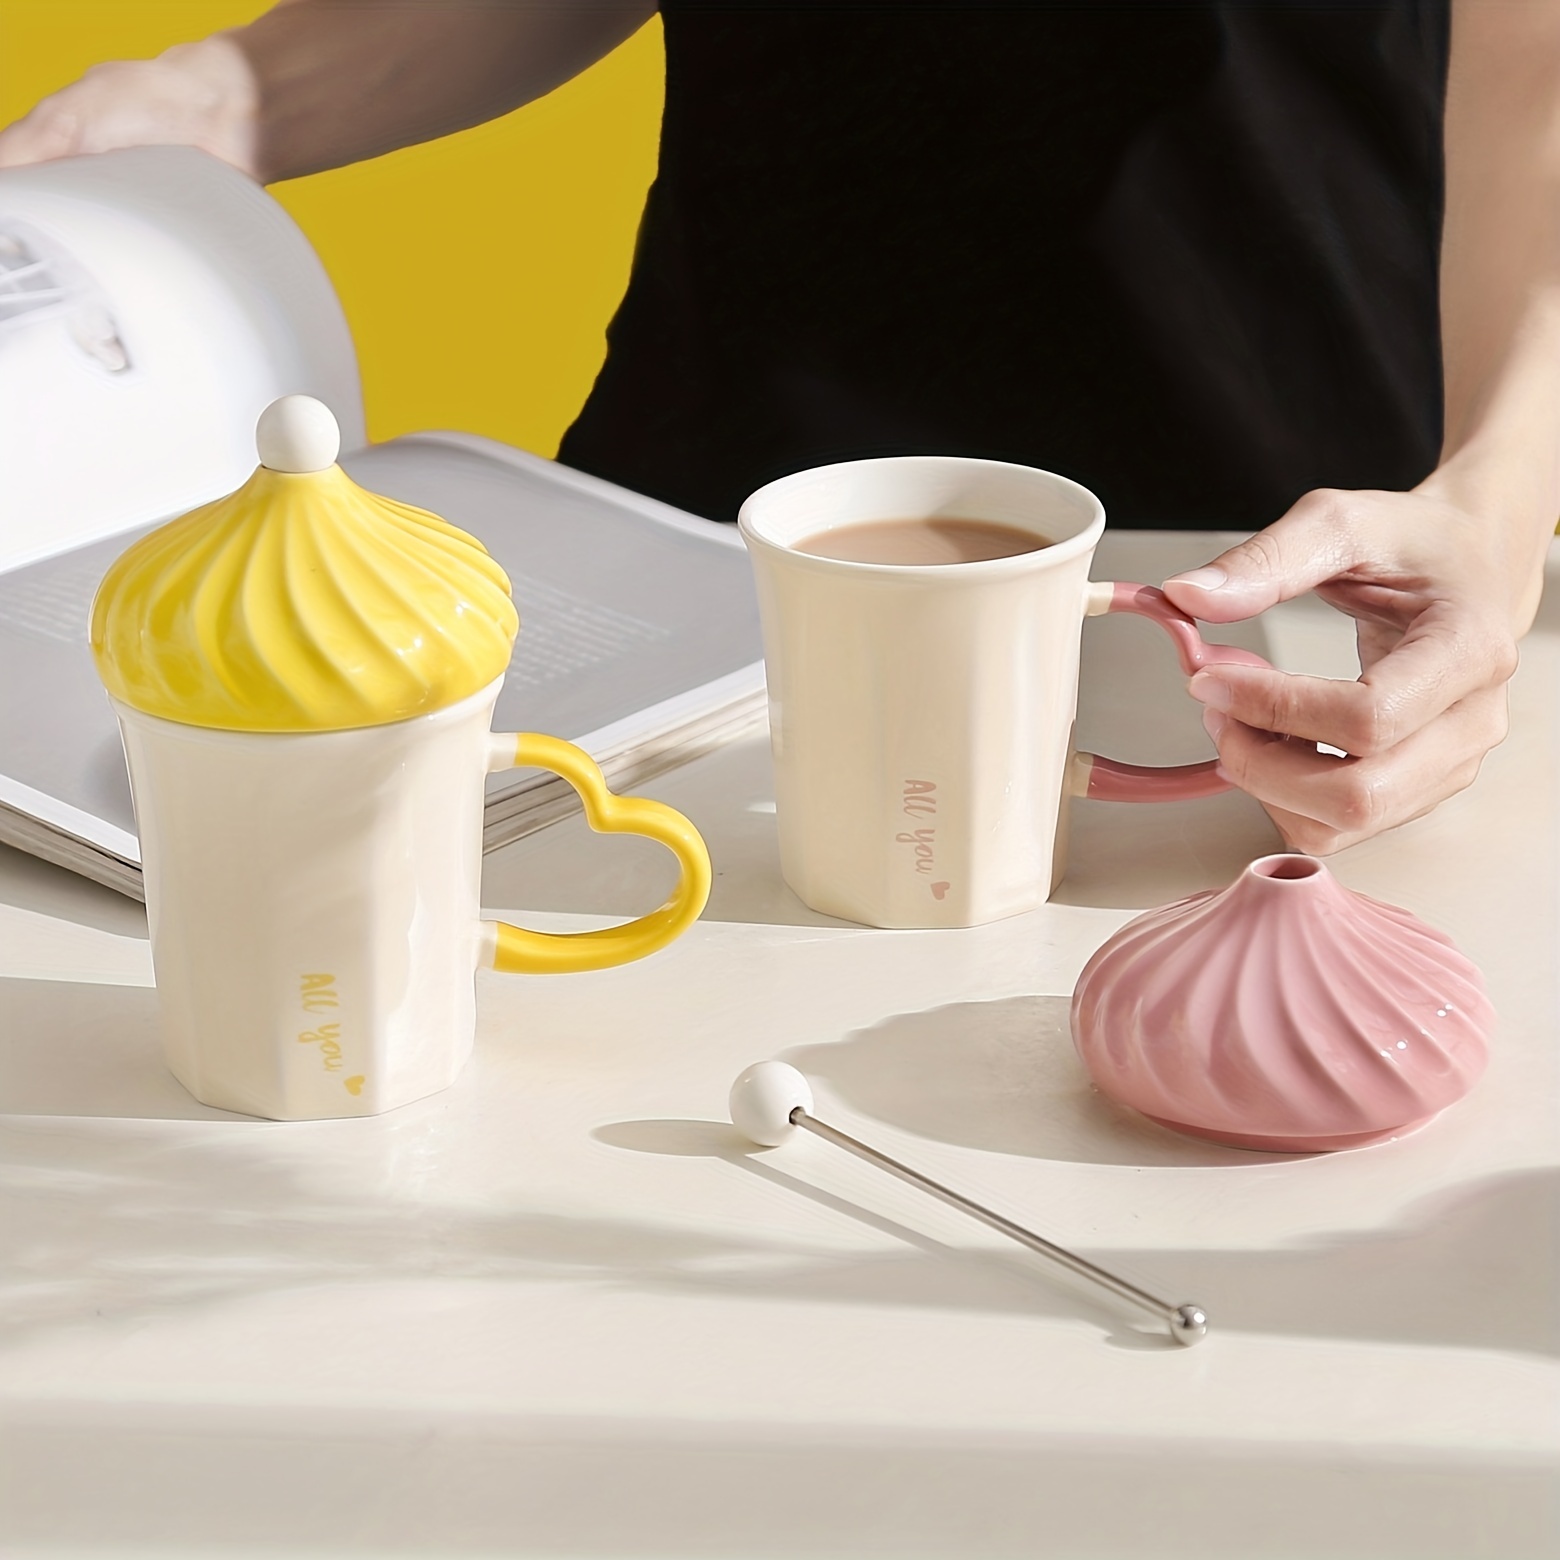 Ice Cream Coffee Cup, Ceramic Decoration Mug